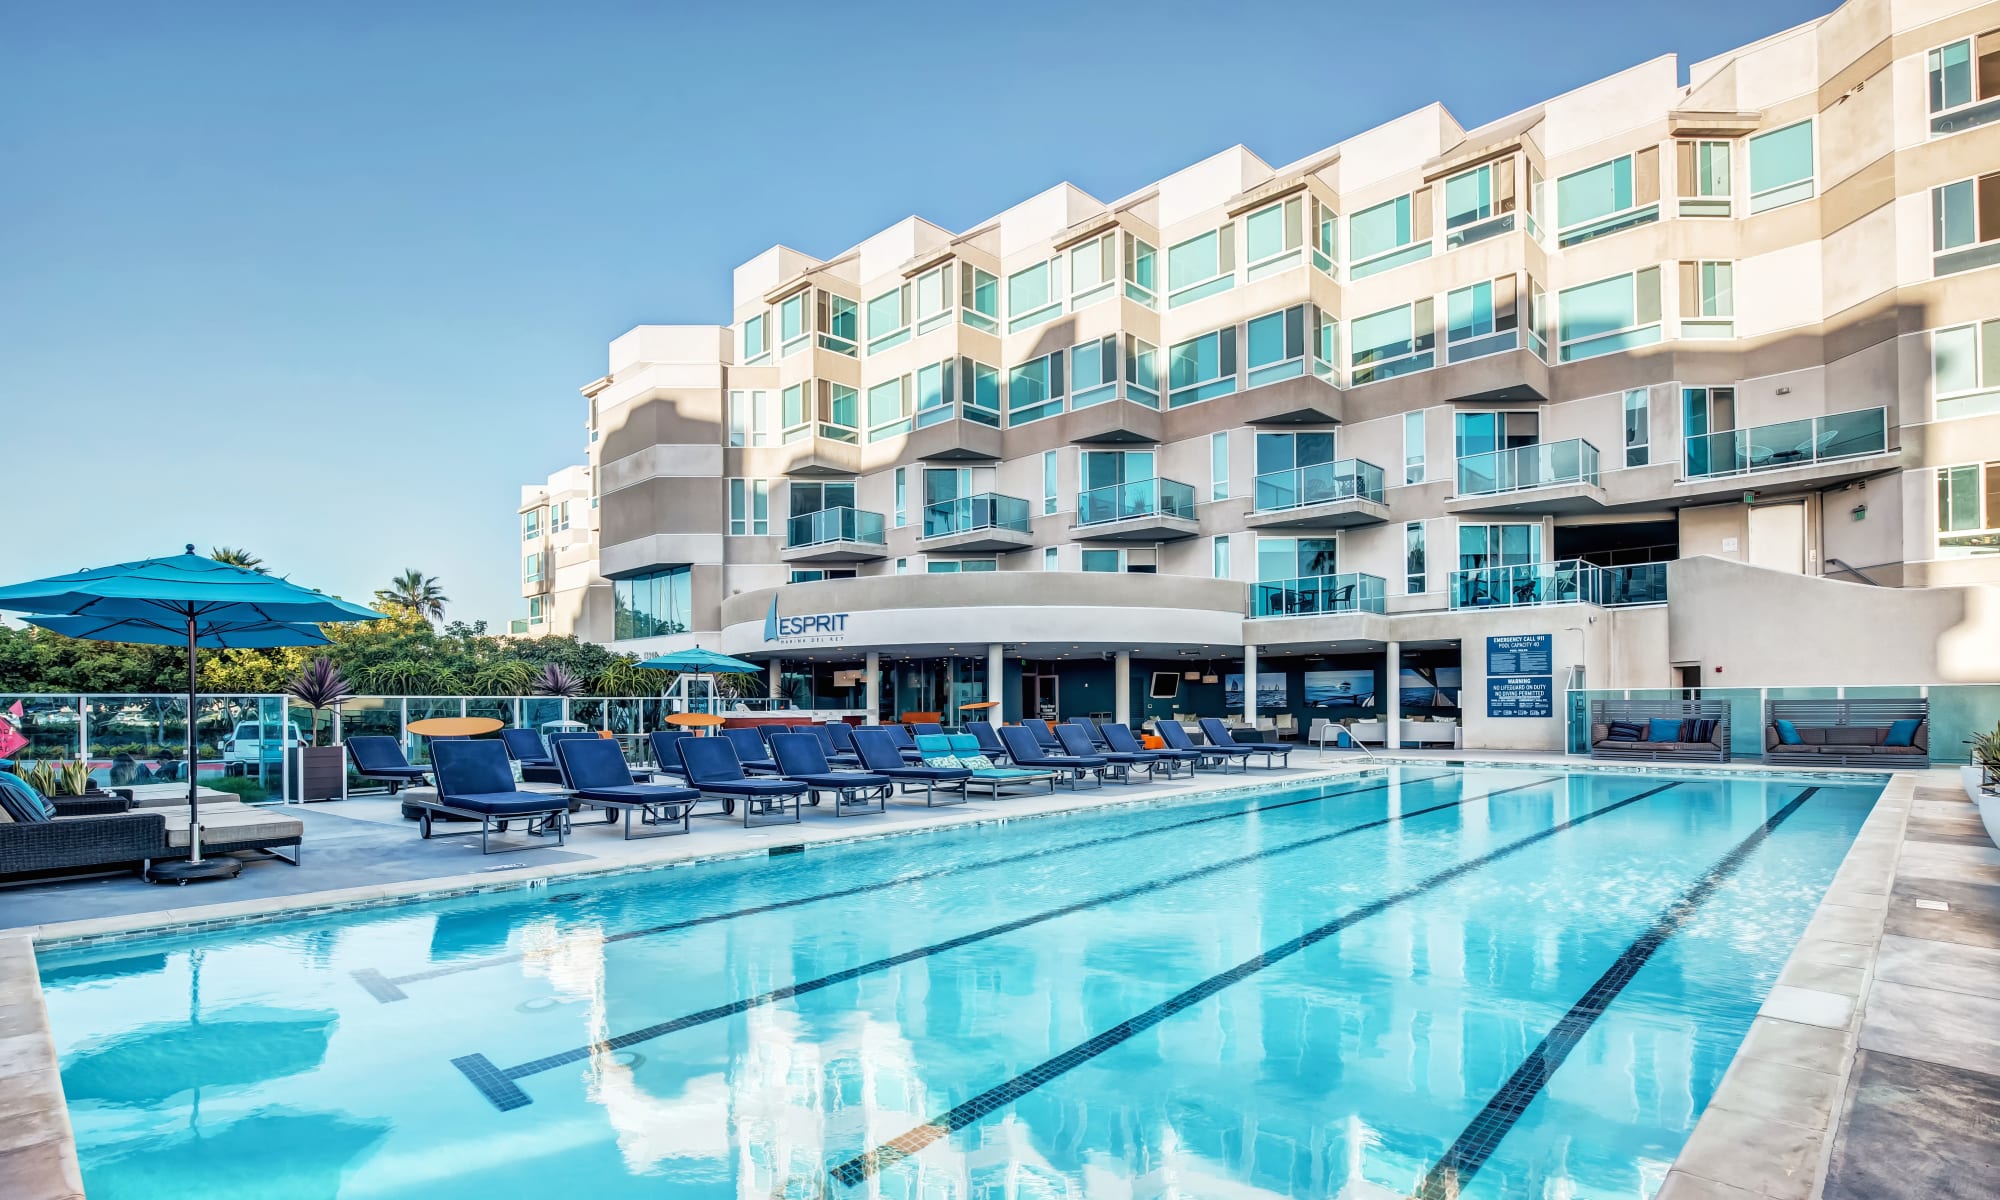 Beautiful resort style swimming pool at Esprit Marina del Rey in Marina del Rey, CA